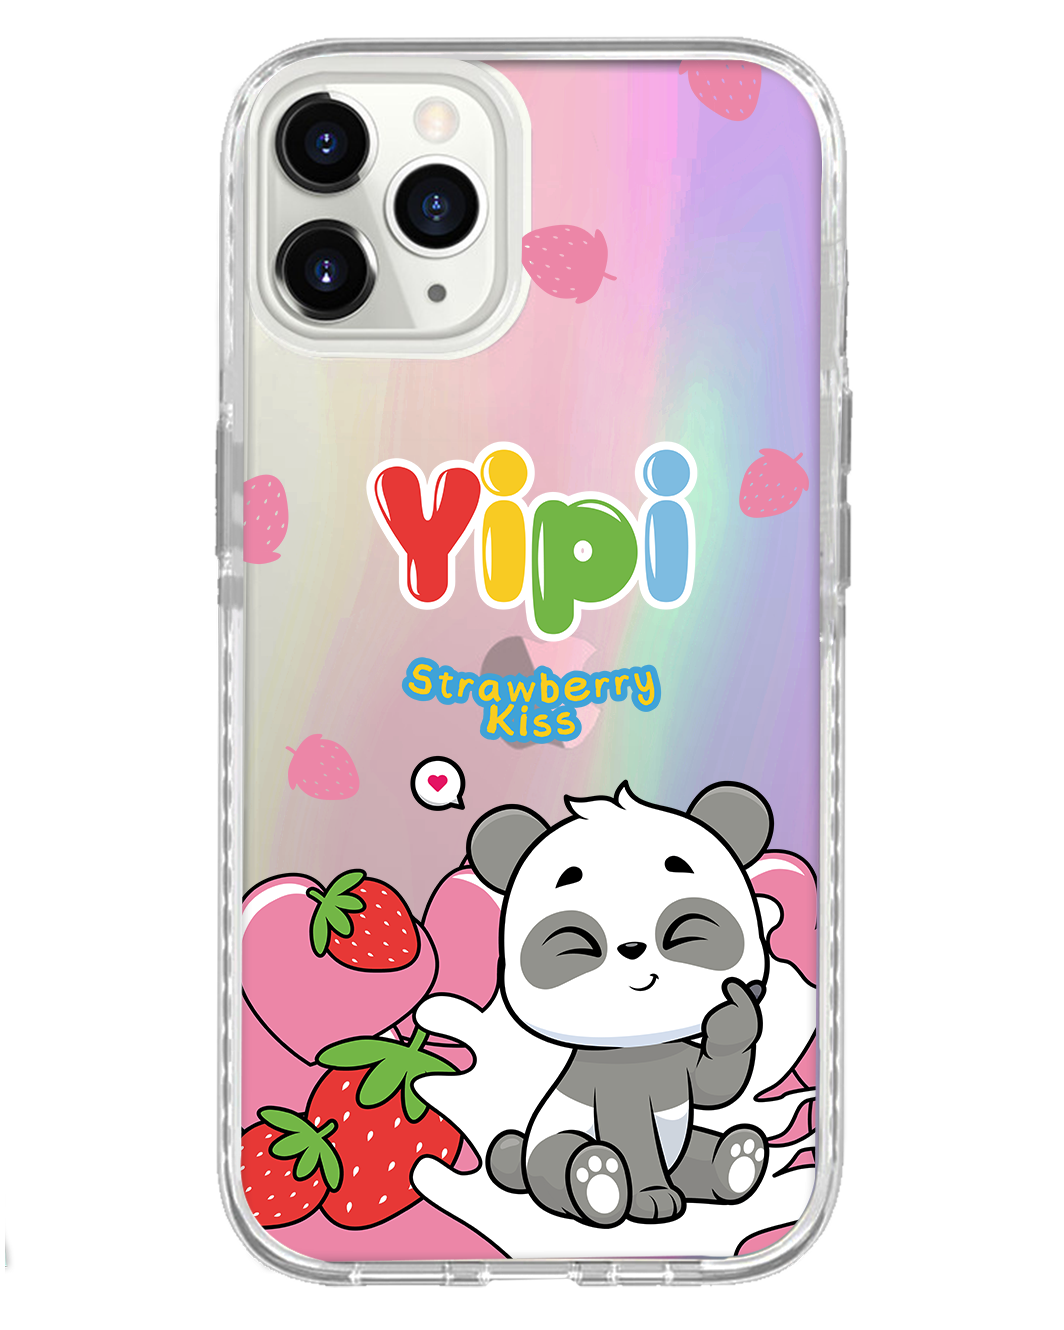 iPhone Rearguard Holo - Yipi Strawberry Kiss